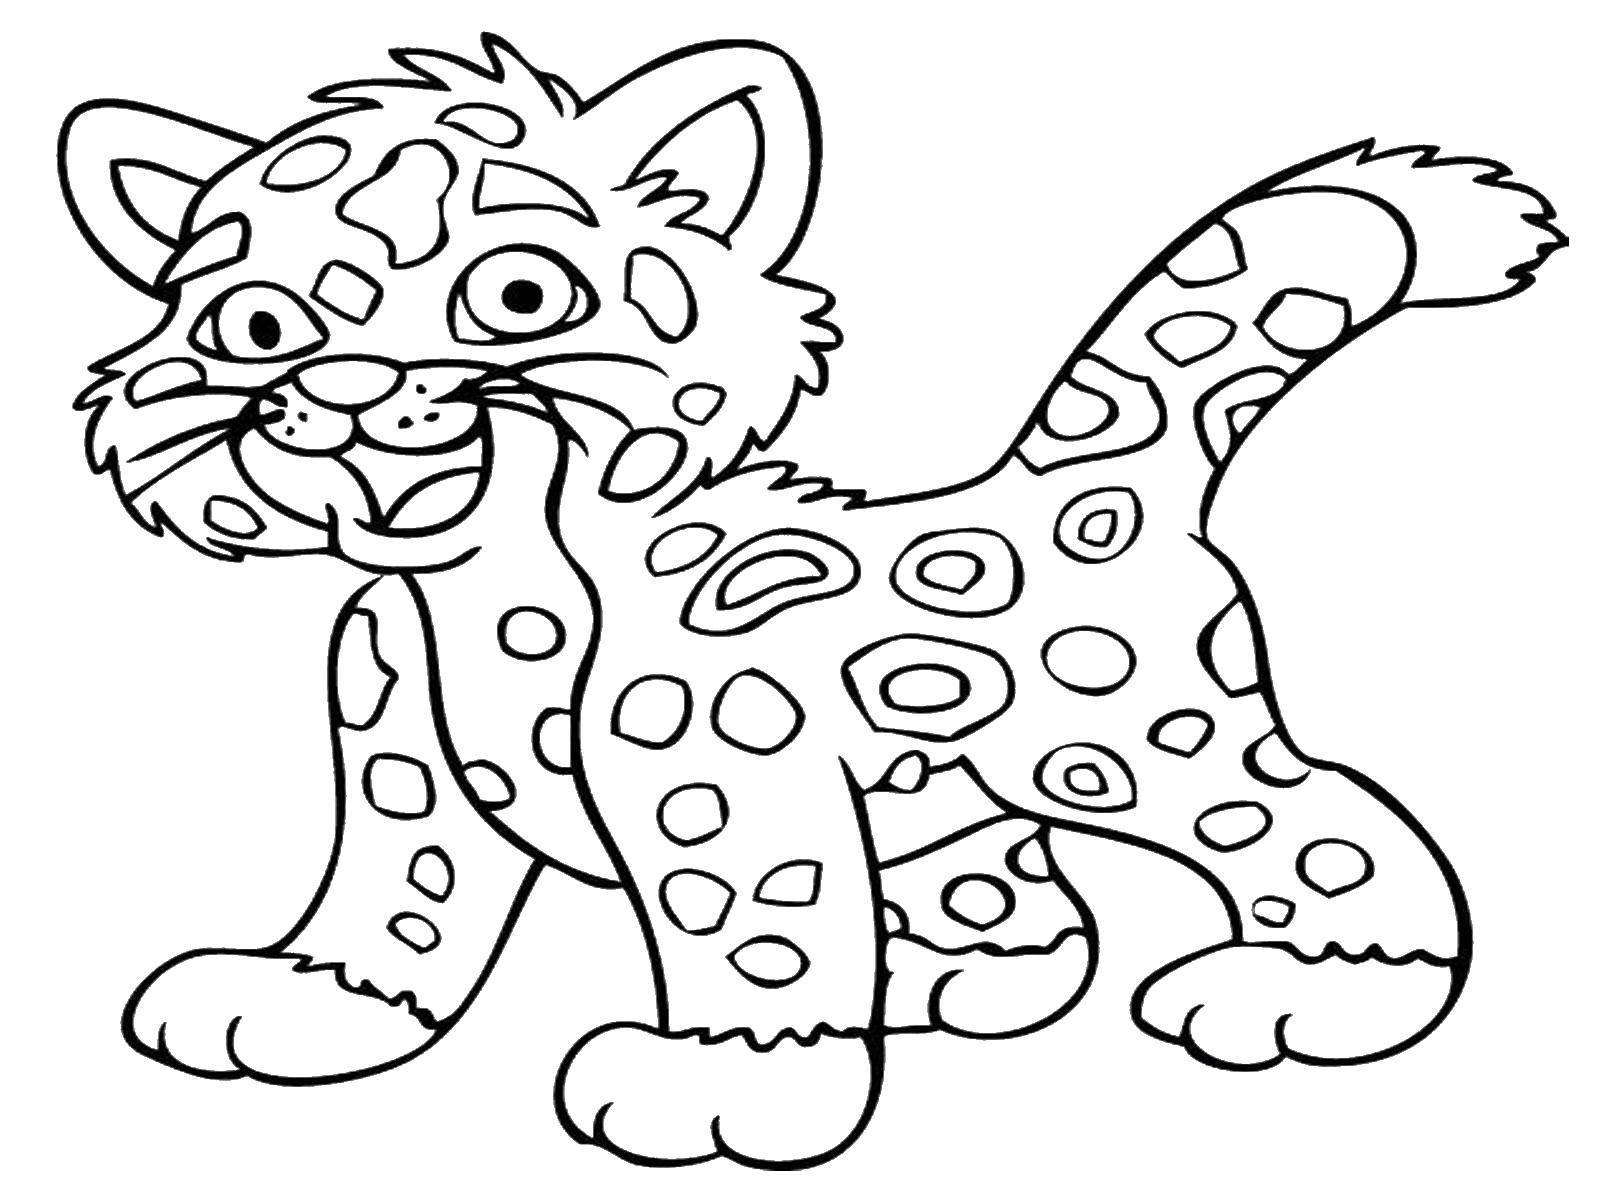 Опис: розмальовки  Малютка леопард. Категорія: тварини. Теги:  тварини, леопард.